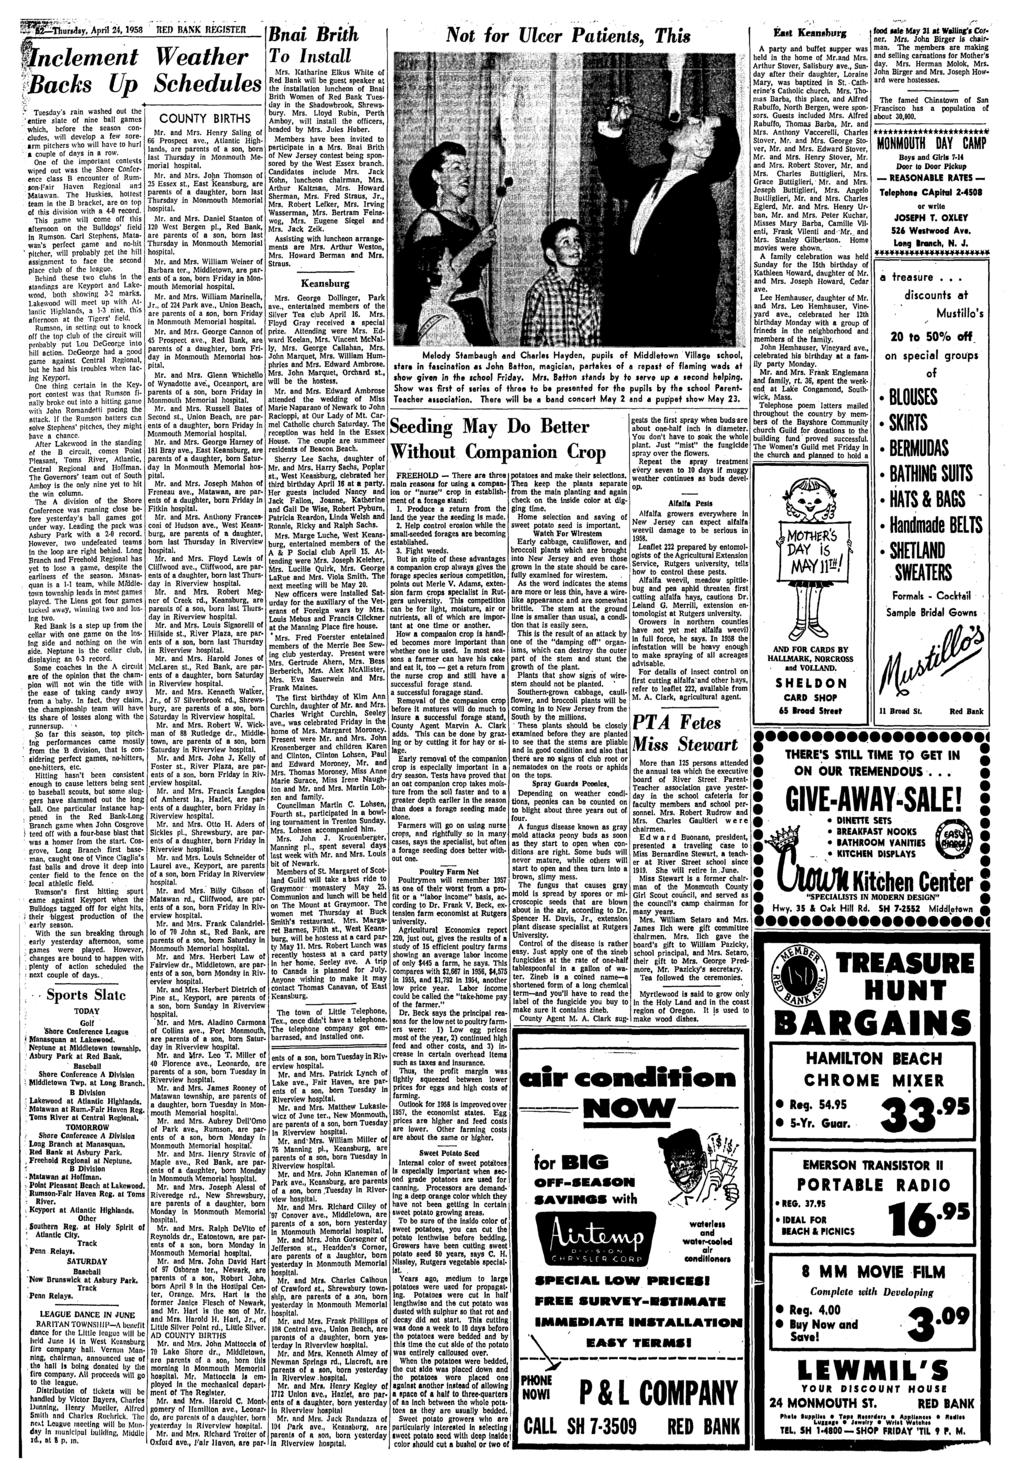 PThureday, April 24,1953 REP BASK REGISTER Inclement Weather fbacks UpSchedules $.